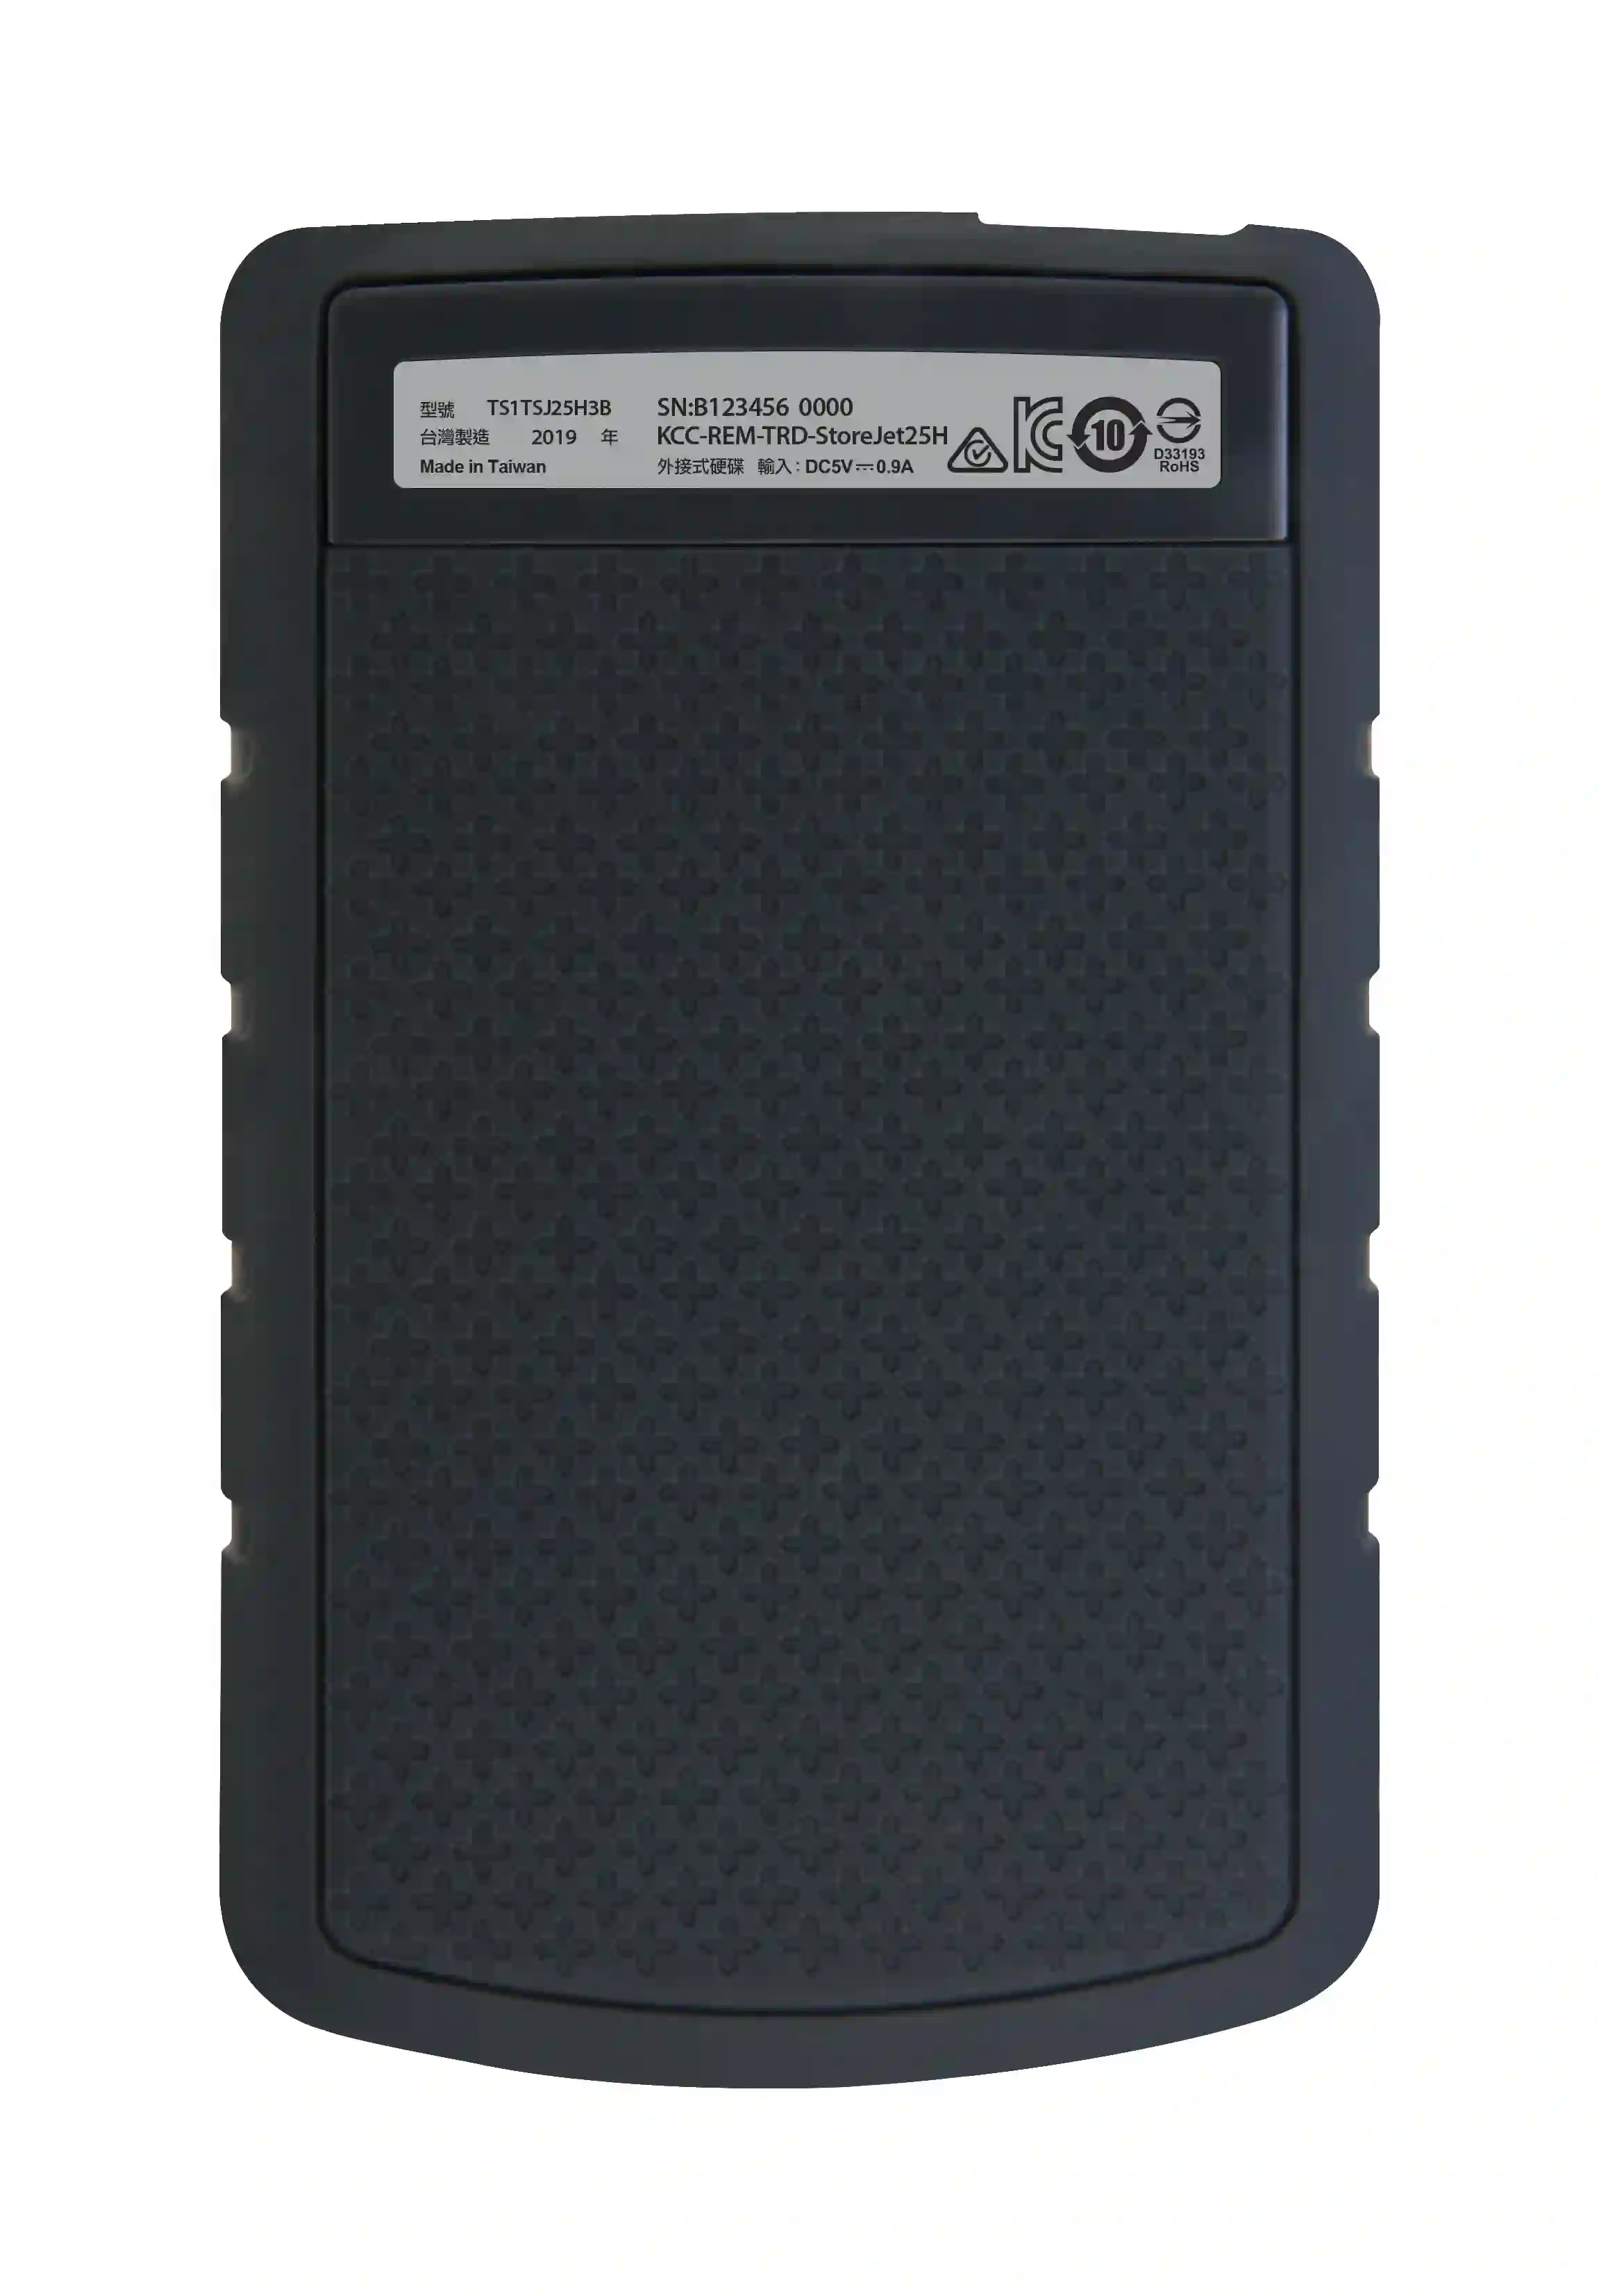 Внешний HDD диск TRANSCEND StoreJet 25H 1TB (TS1TSJ25H3B)